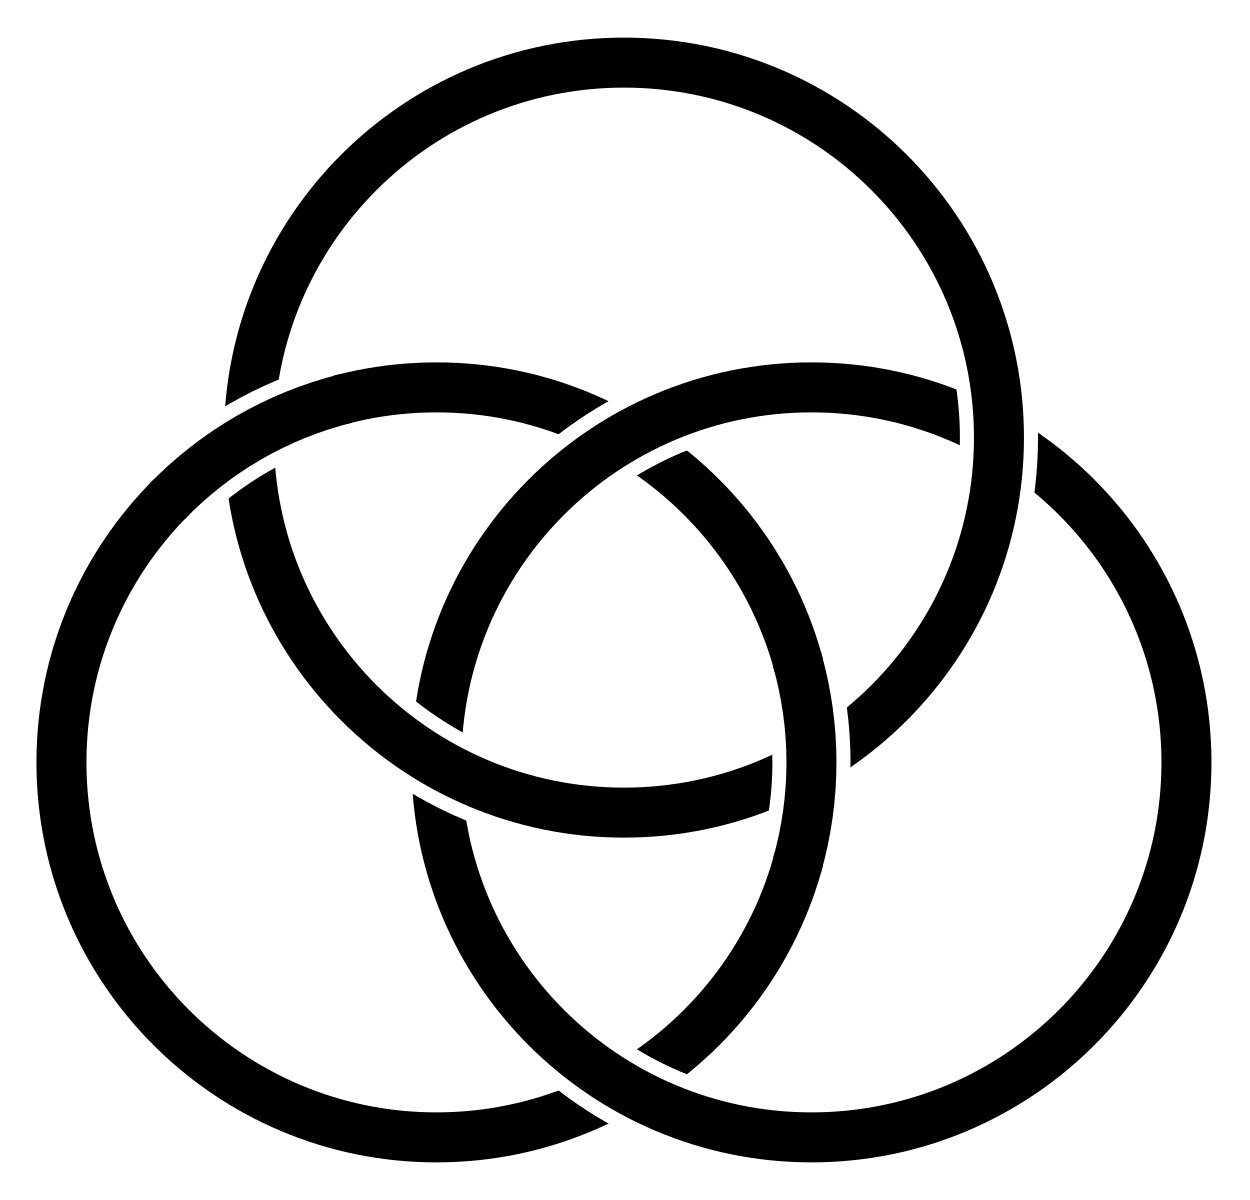 Кольца Борромео Лакан. Кольца Борромео символ. Кельтский символ Трикветра. Кольца Борромео из 4 колец. Знак маленького круга